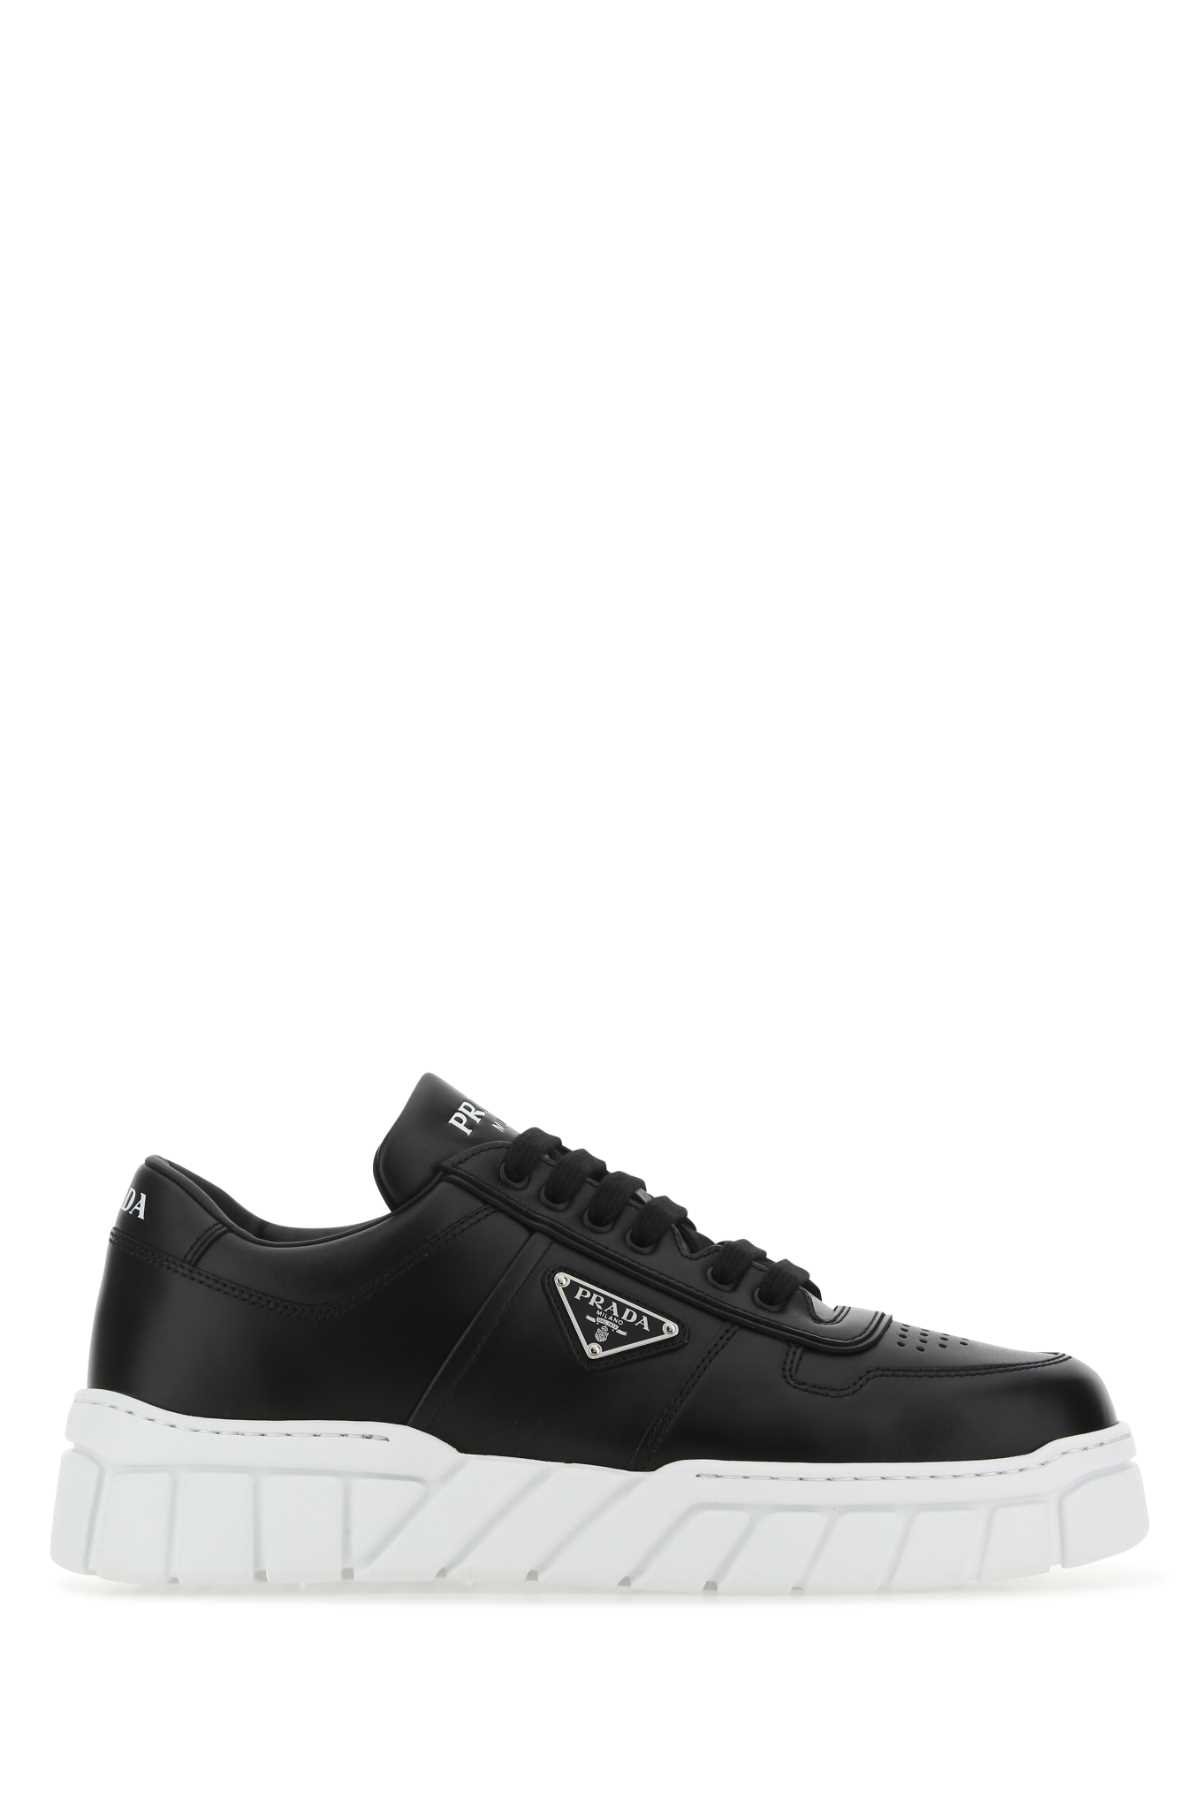 Shop Prada Black Leather Sneakers In F0632